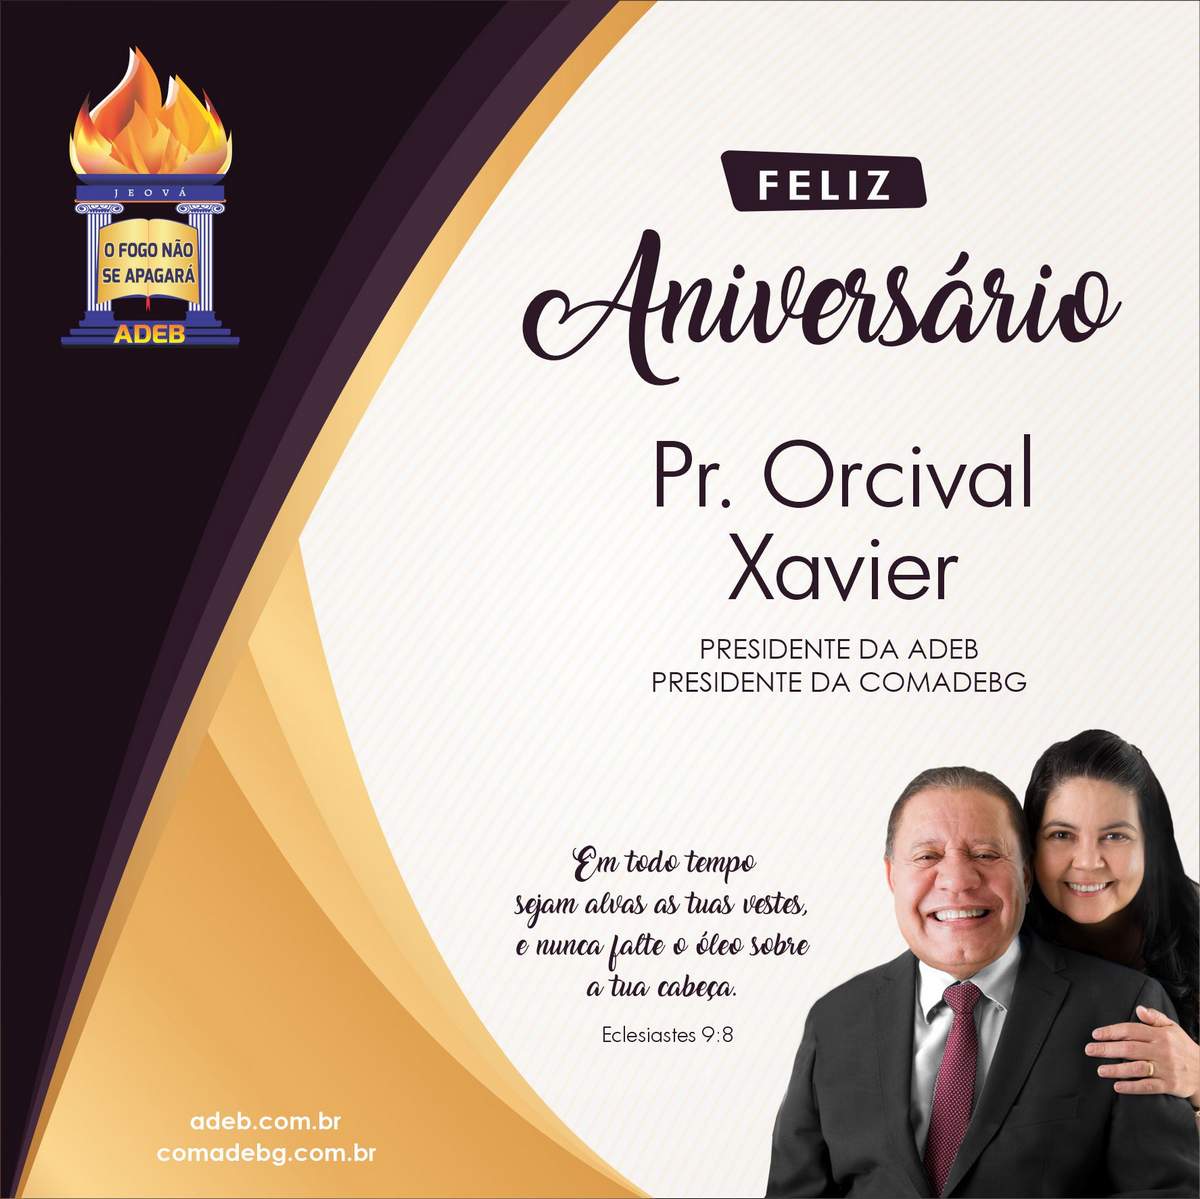 Feliz Aniversário, Pr. Orcival Xavier!